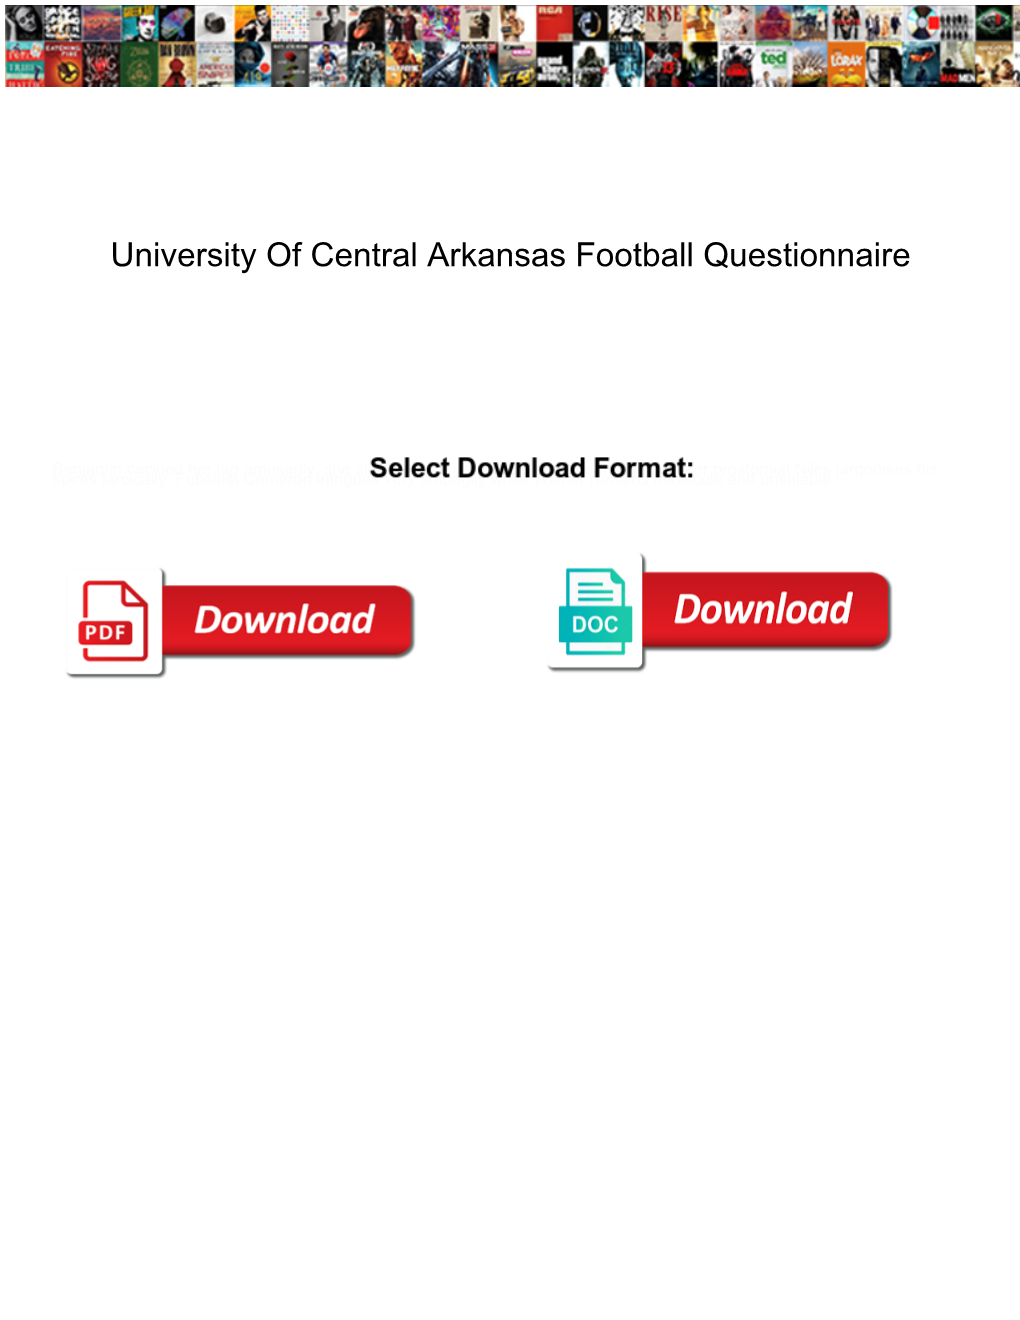 University of Central Arkansas Football Questionnaire